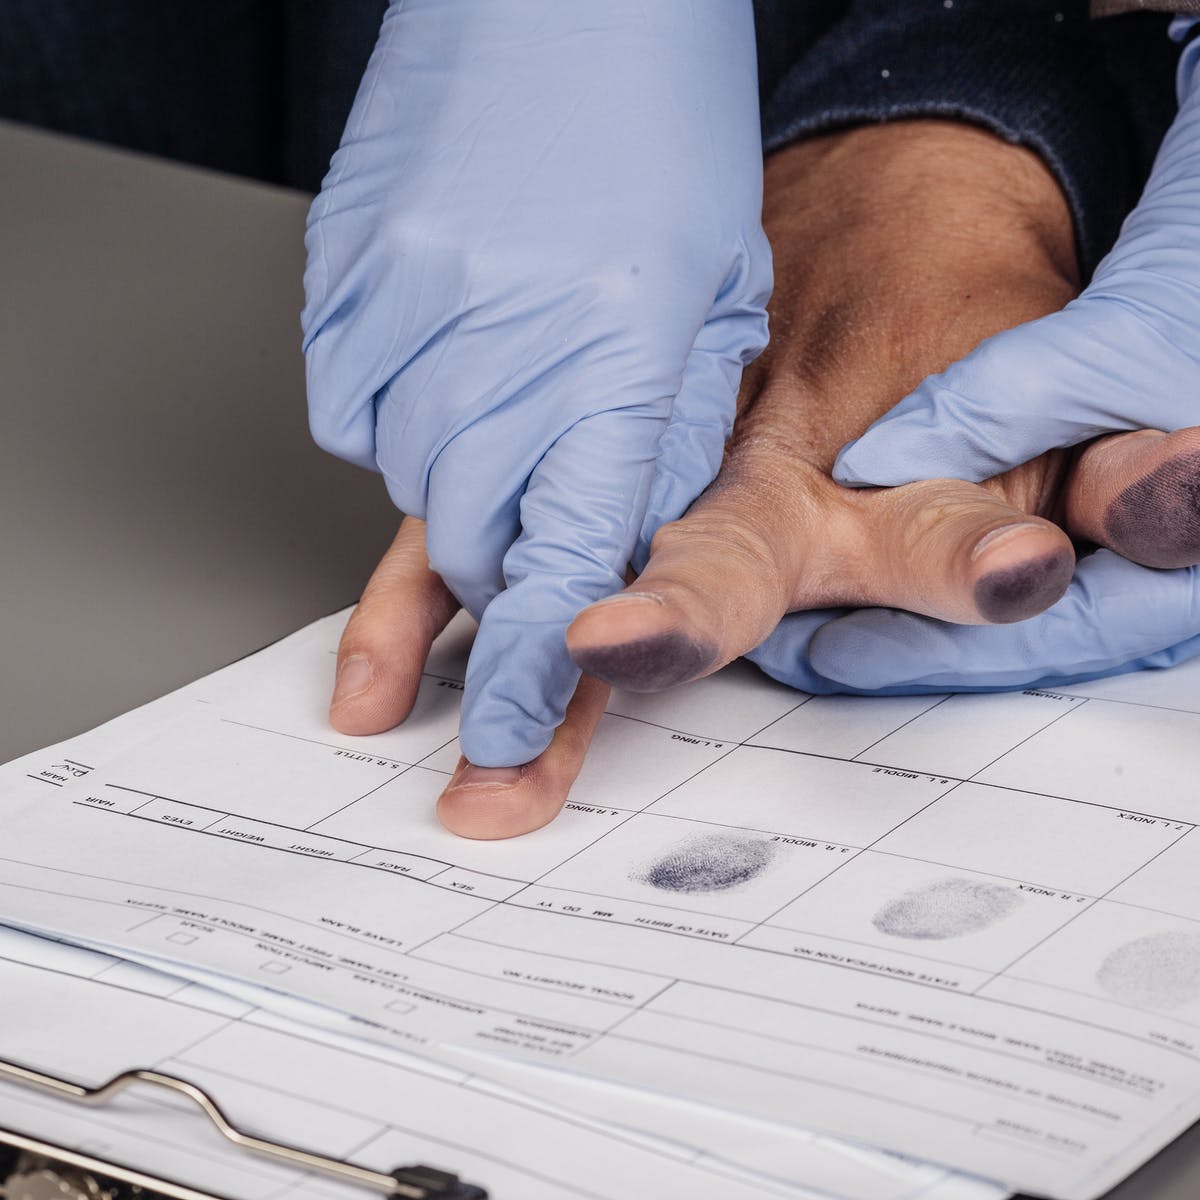 police fingerprinting